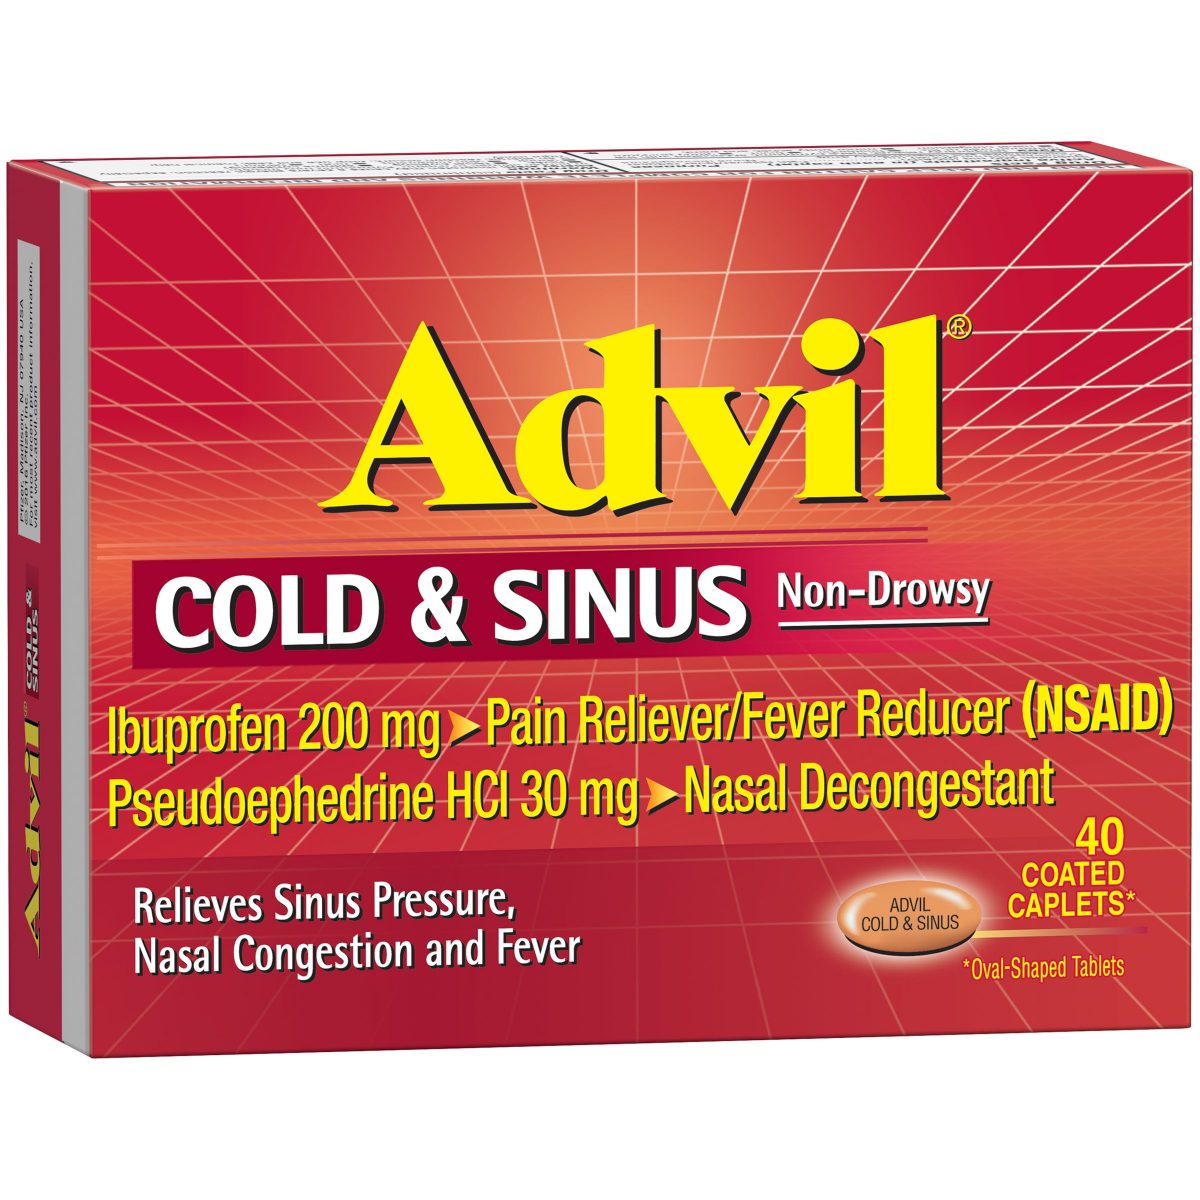 Advil Cold &  Sinus Ibuprofen Nasal Decongestant Coated Caplets